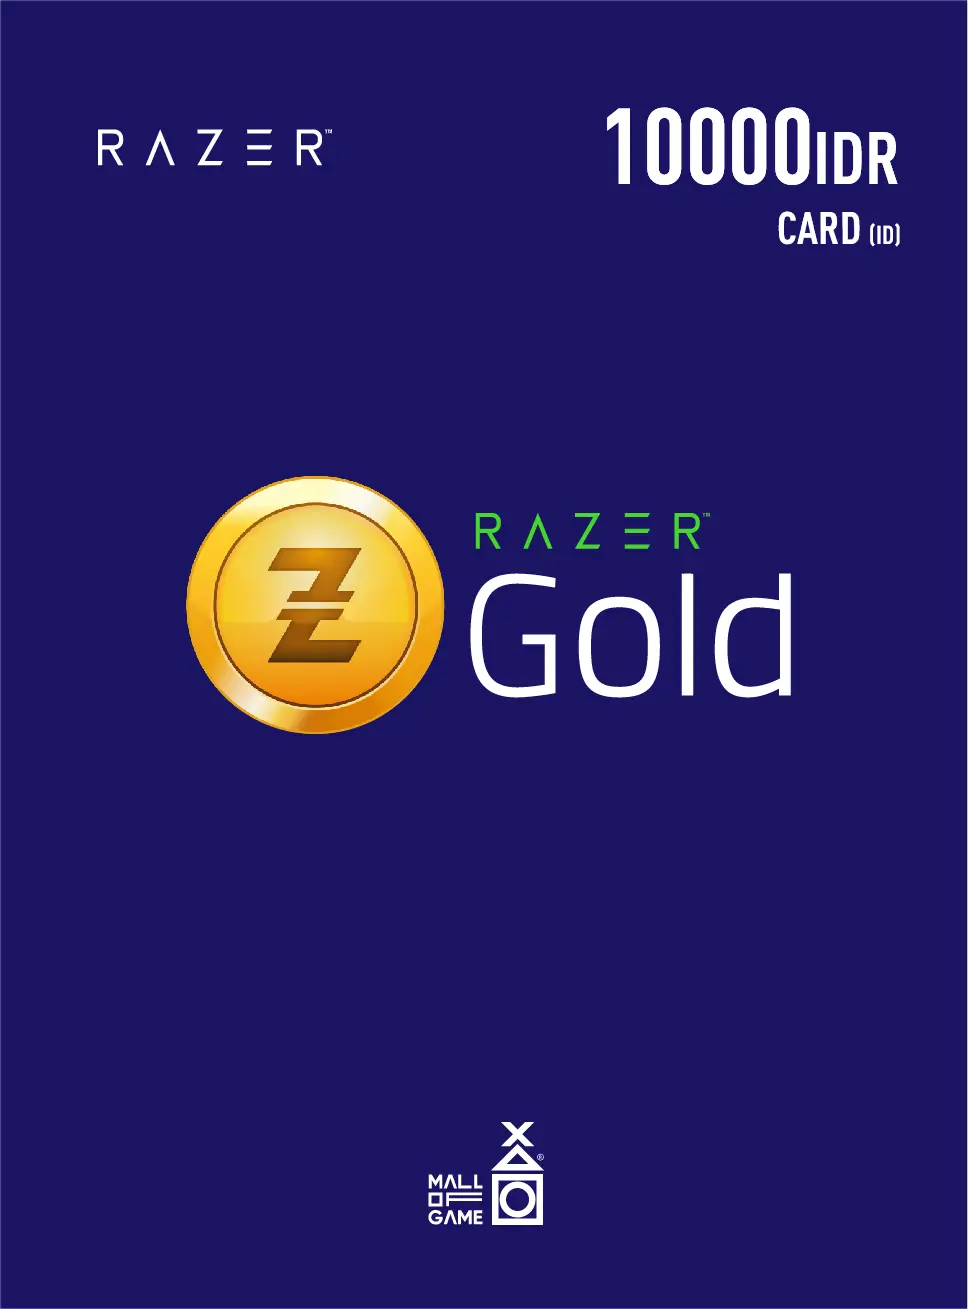 Razer Gold IDR10,000 (ID)